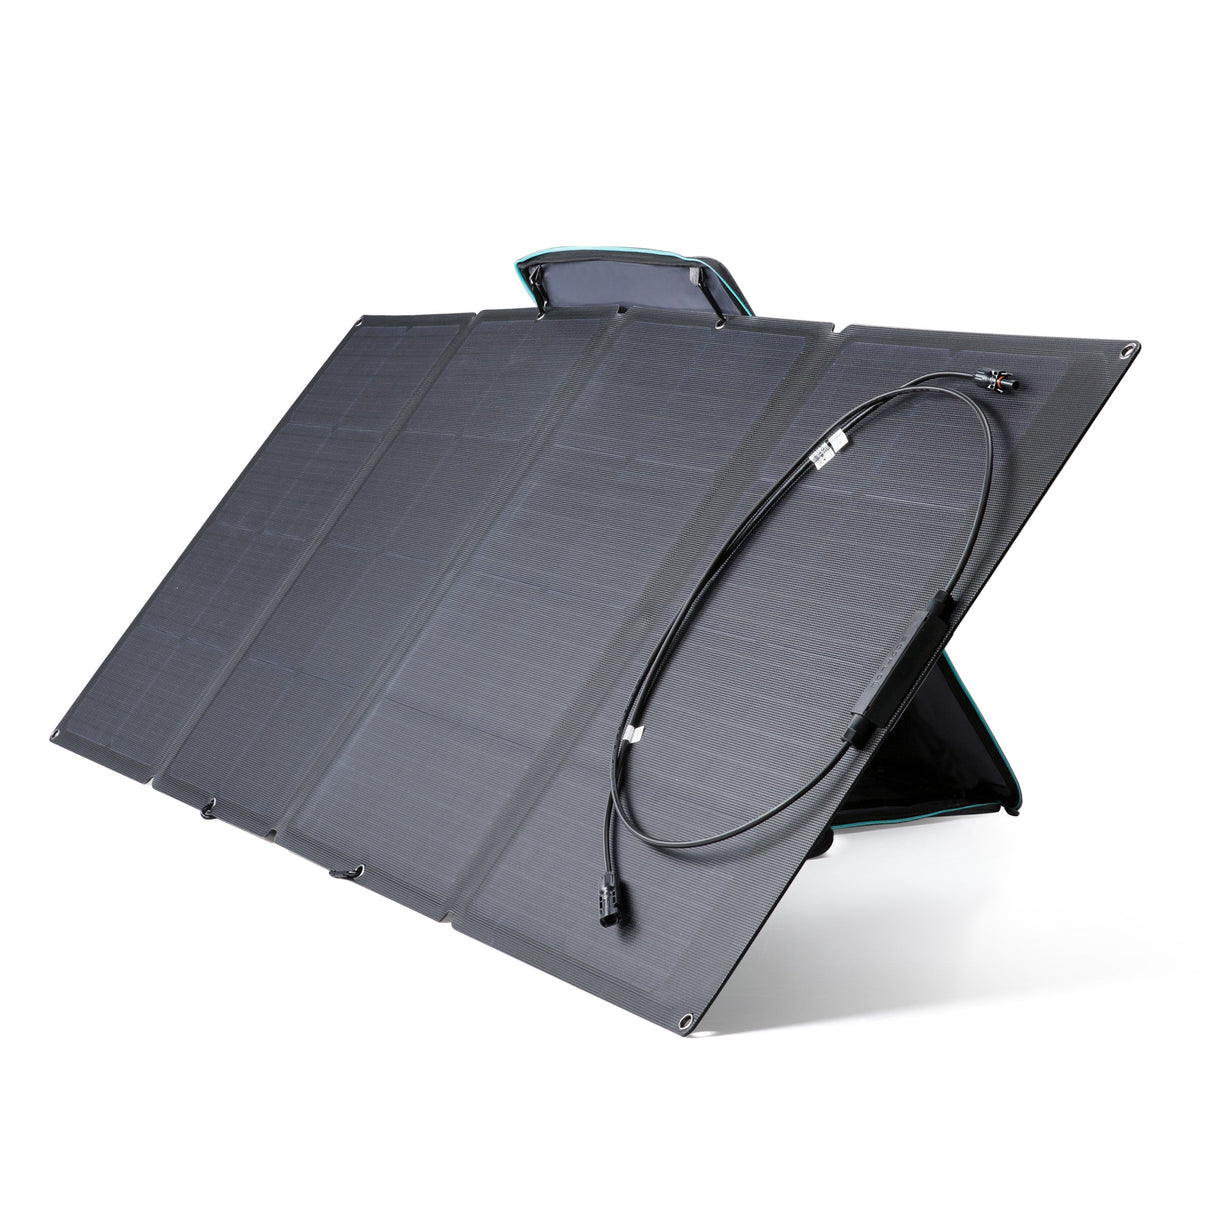 EcoFlow DELTA Max 2016Wh 2400W + 4 x 160W Solar Panels Complete Solar Generator Kit - EF-DELTAMax2000US164 - Avanquil